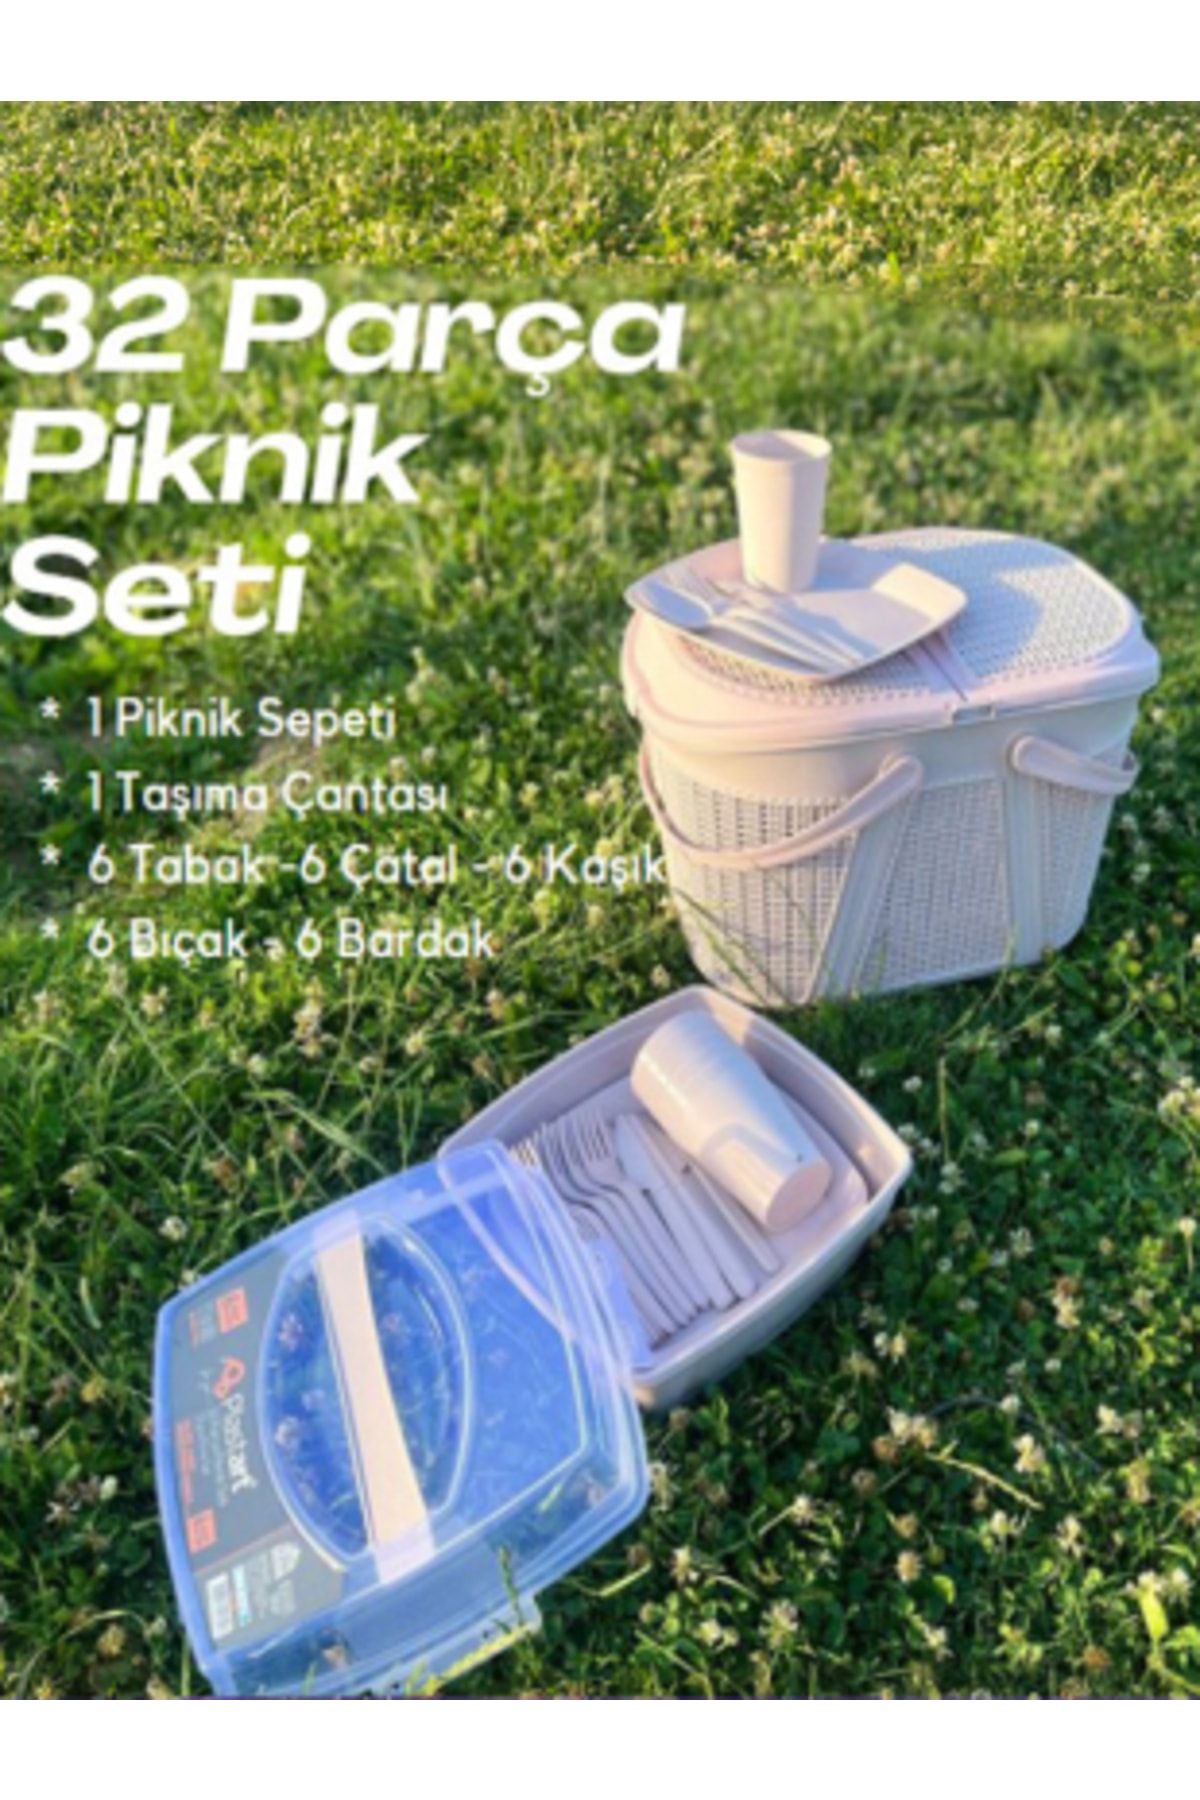 King Mop 32 Parça Piknik Seti ( Sepet + Çantalı Bardak,çatal,kaşık,bıçak,tabak Seti ) | 32 Piece Picnic Set